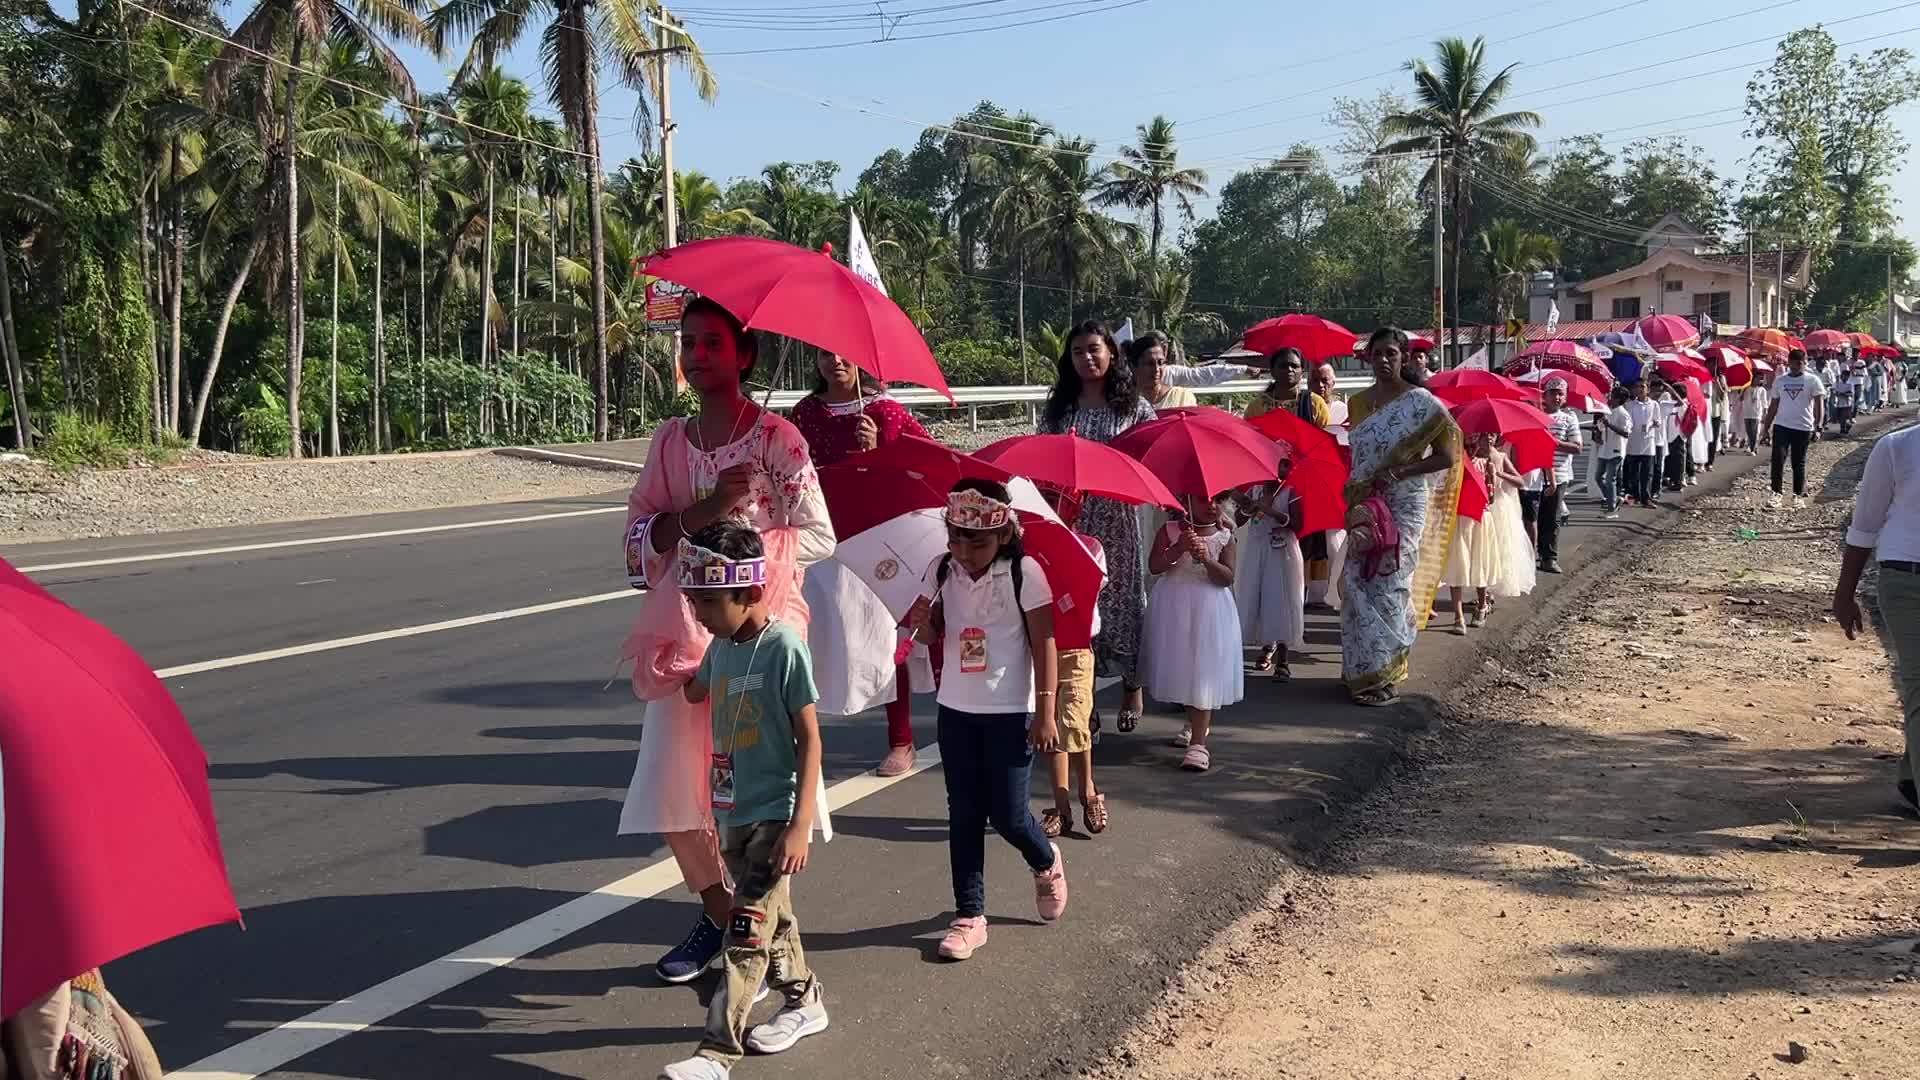 George Orthodox Church procession in Kerala